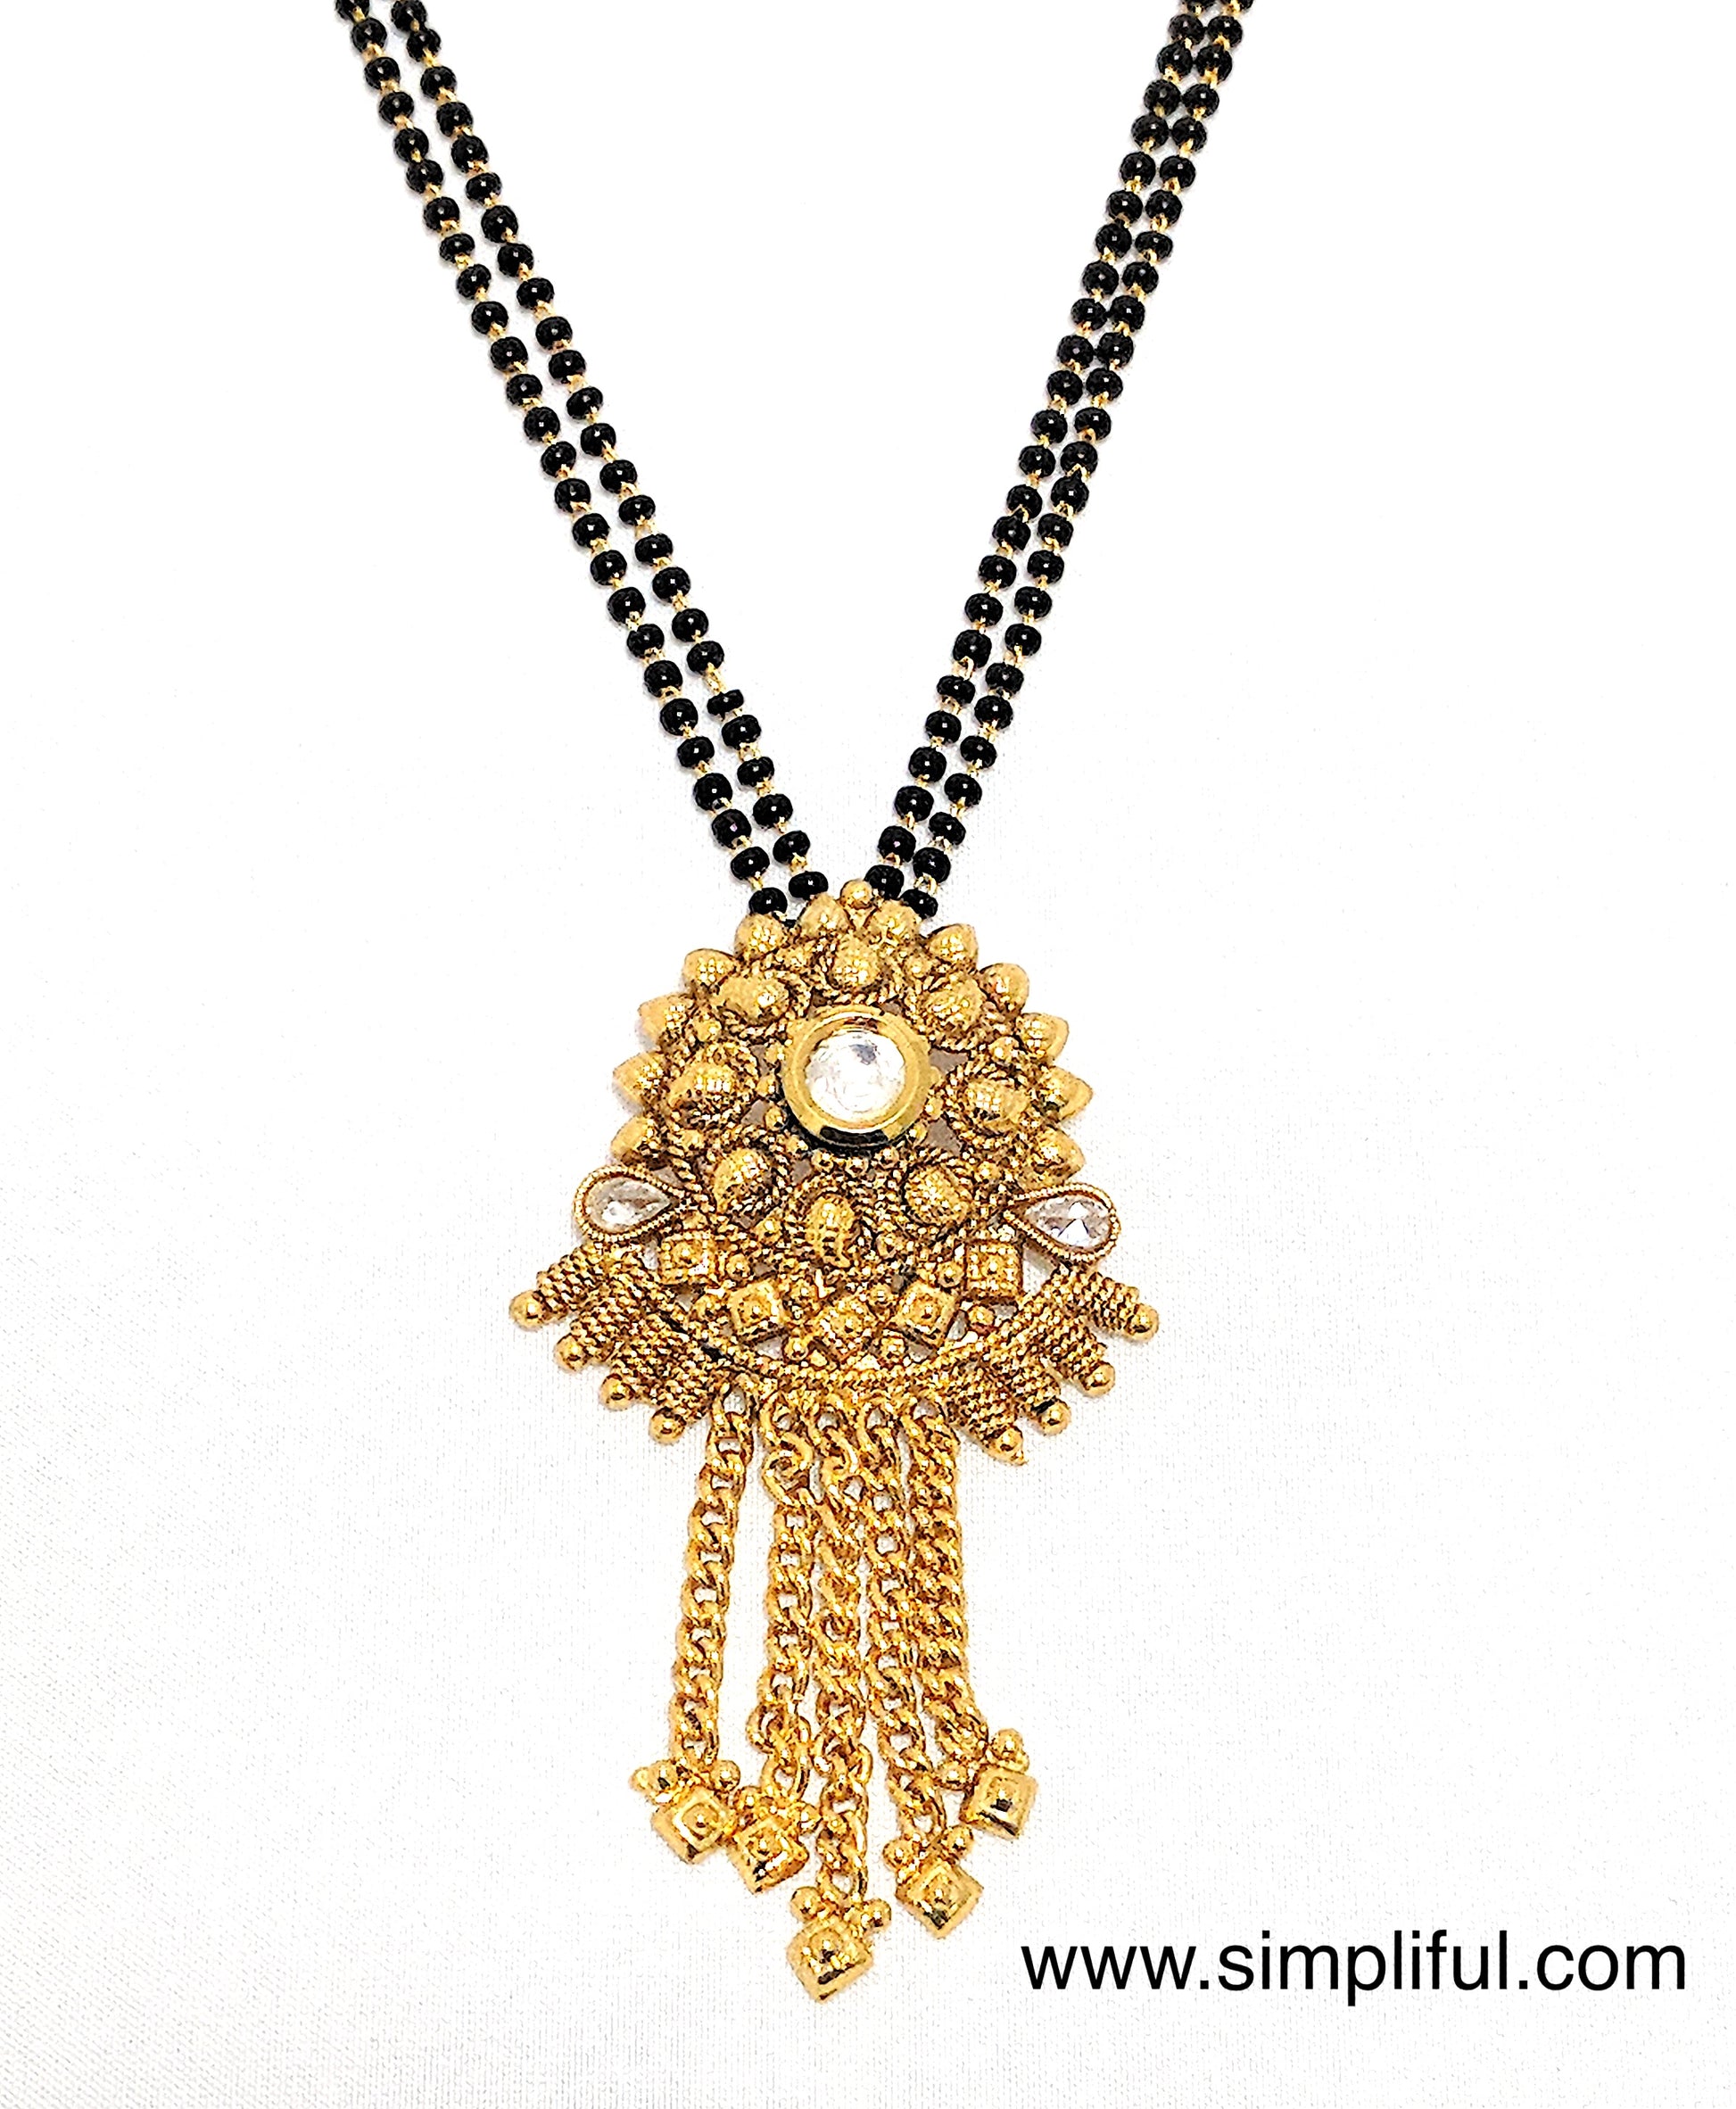 Antique gold Pendant Mangalsutra - Simpliful